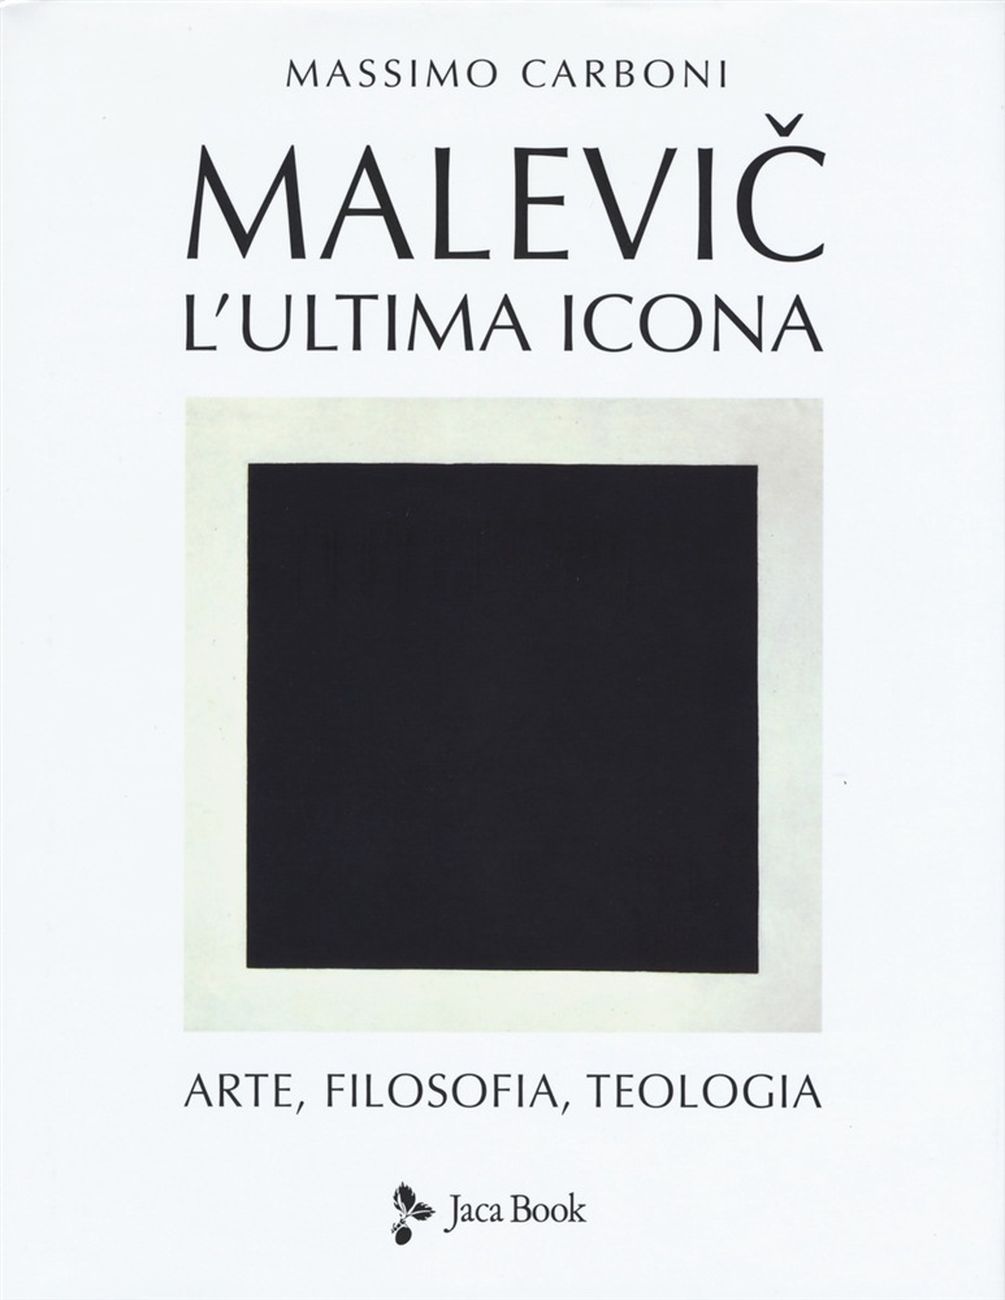 Massimo Carboni – Malevič. L'ultima icona (Jaca Book, Milano 2019)